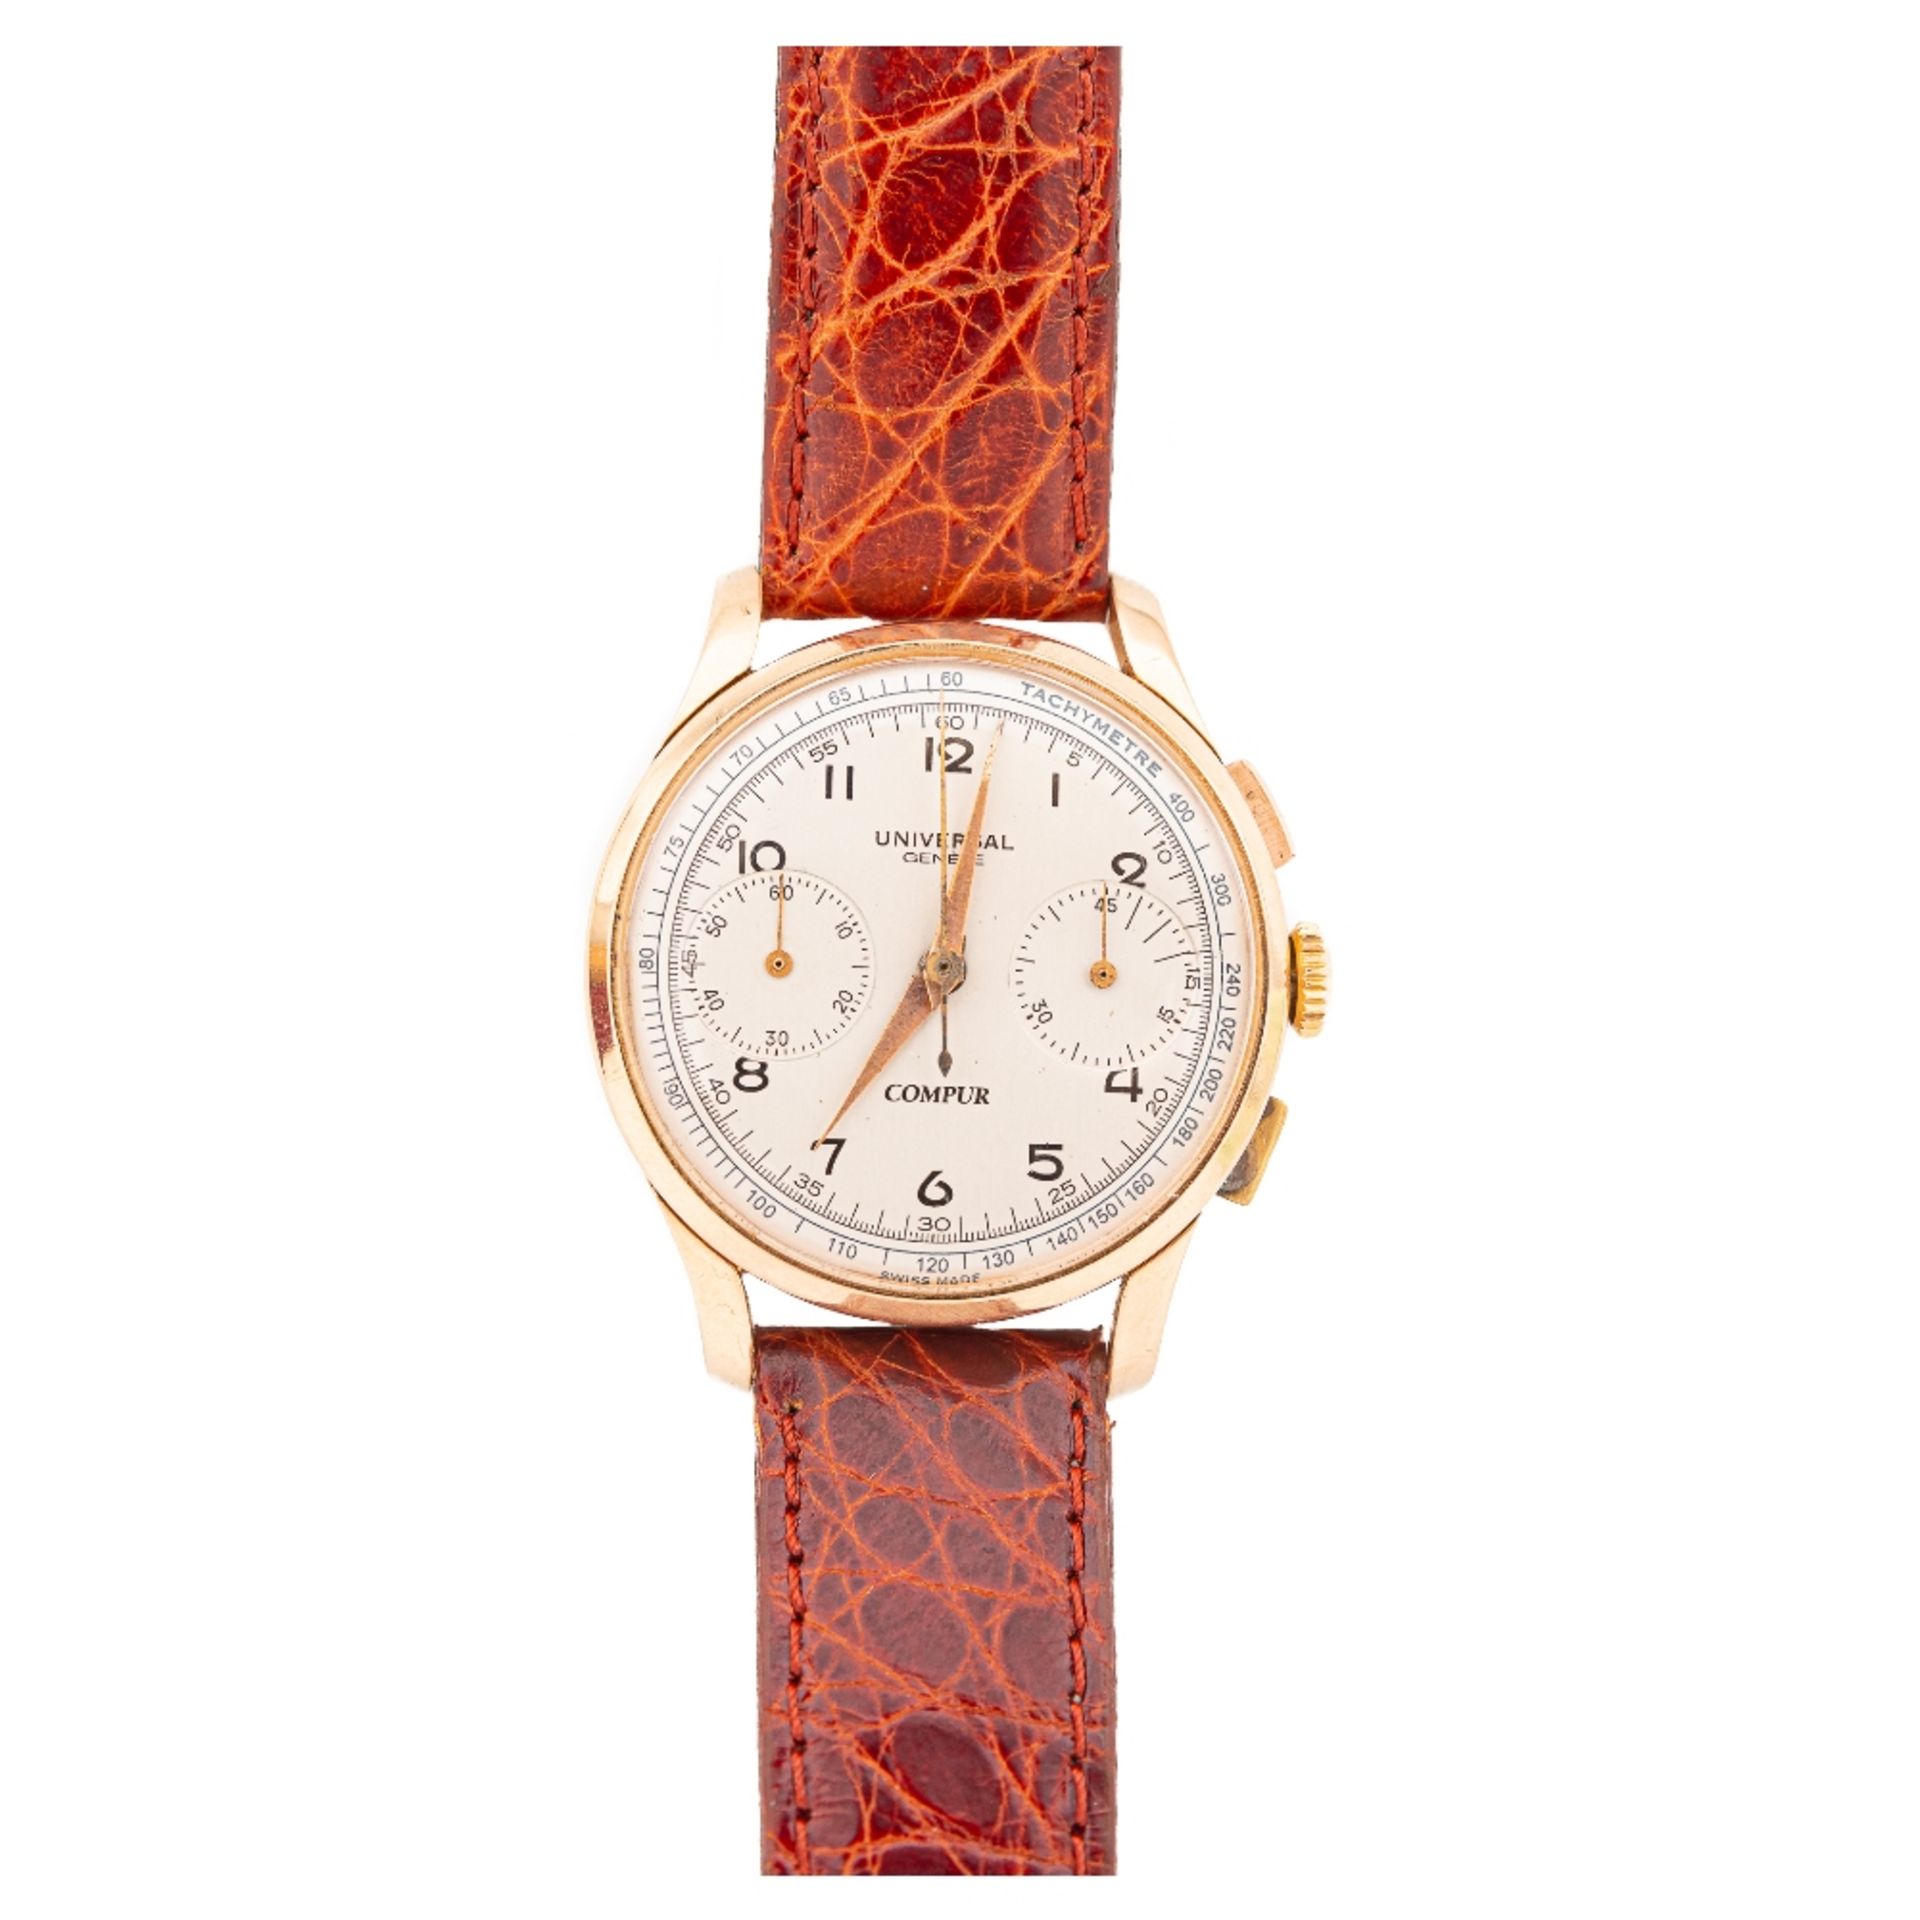 Universal Genève Compur, reloj de pulsera para caballero en oro, c.1940.